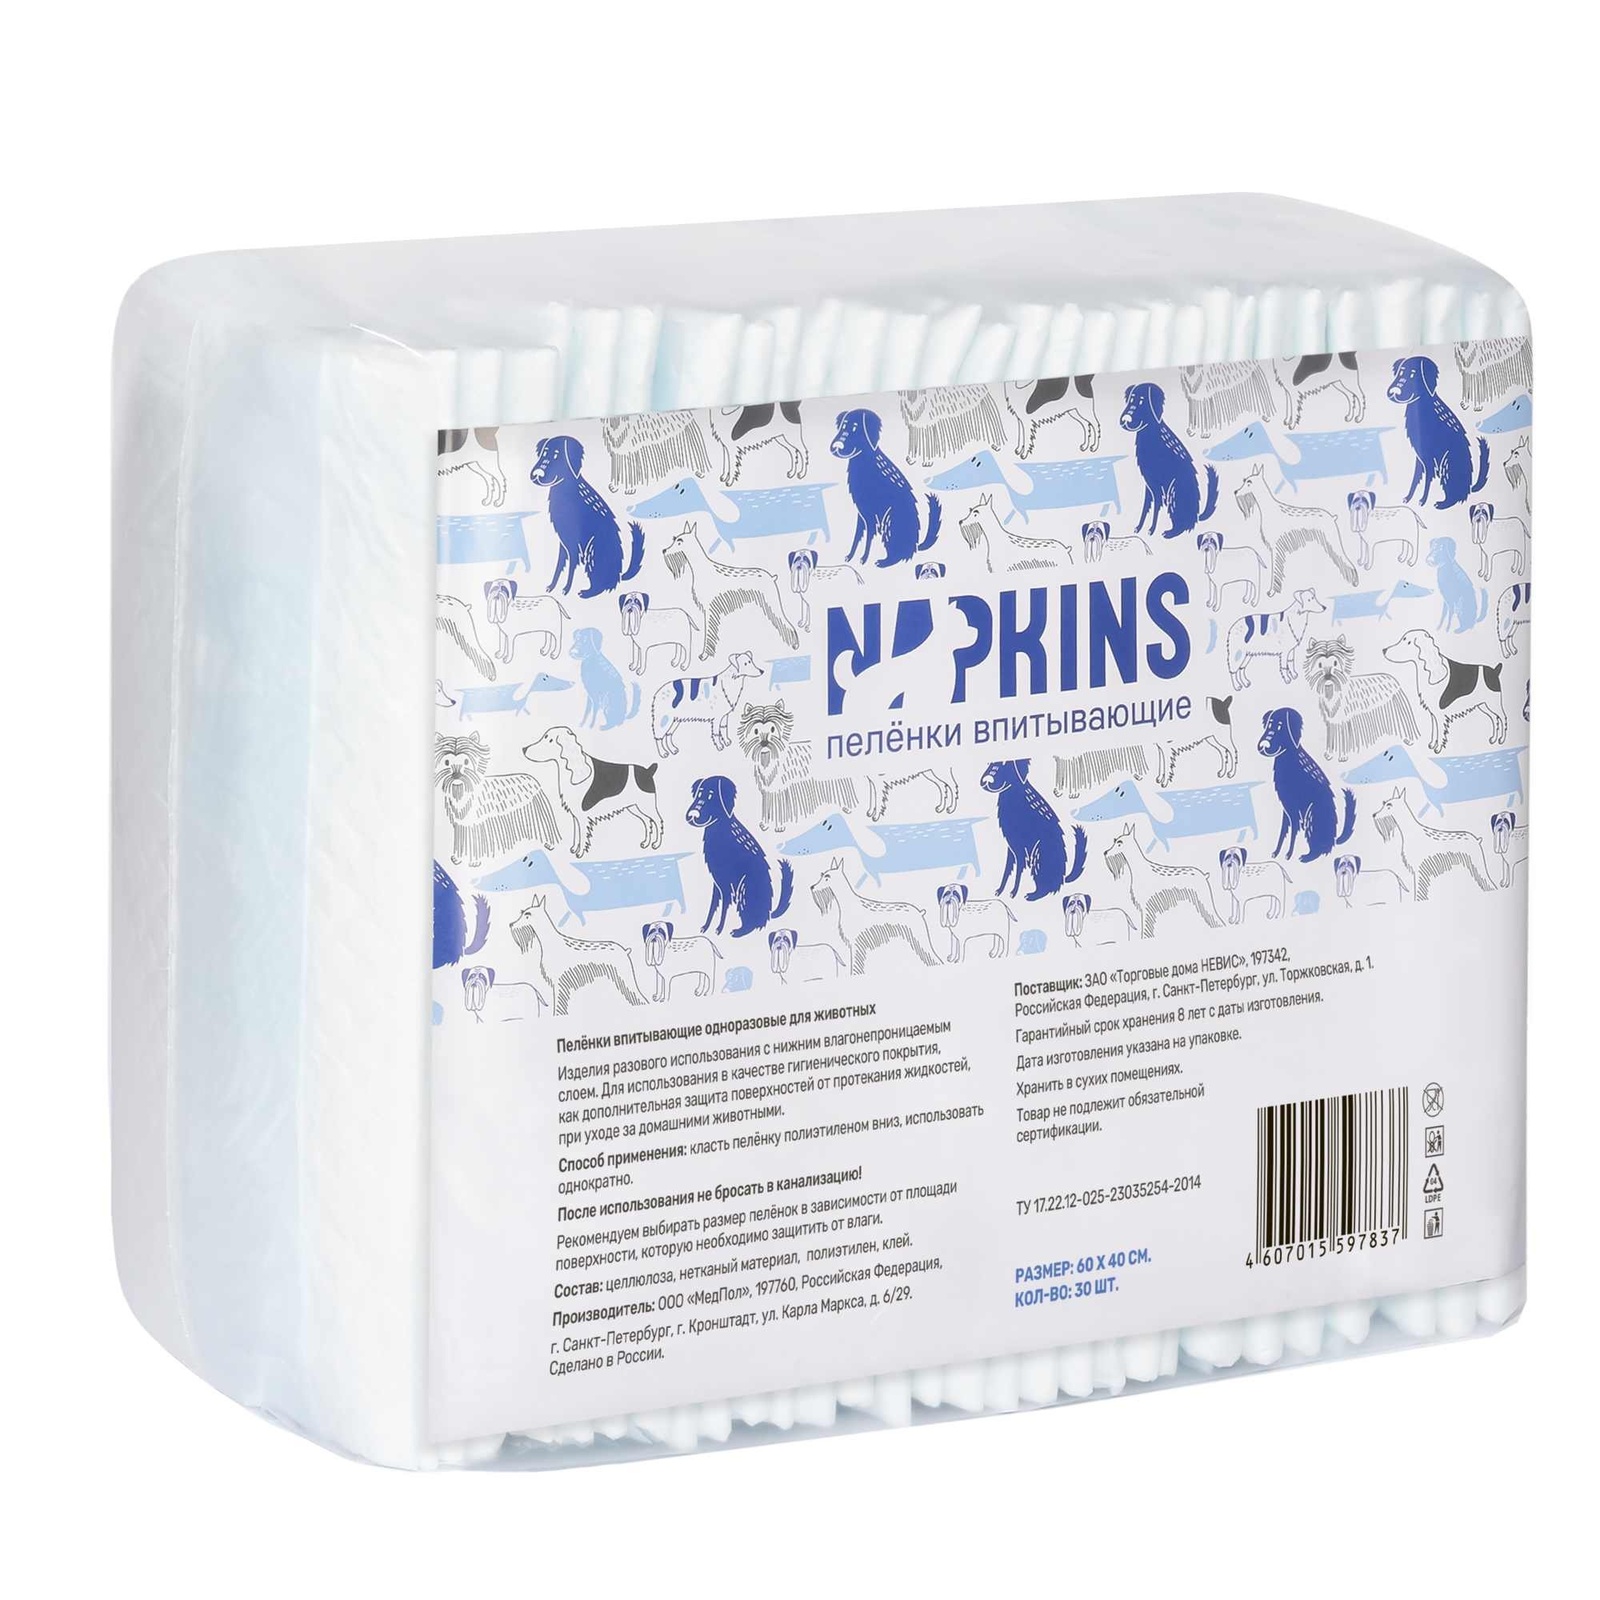 NAPKINS NAPKINS впитывающие пелёнки с целлюлозой для собак 60х40 (100 г) napkins napkins впитывающие пелёнки с целлюлозой классические 60х40 30 шт